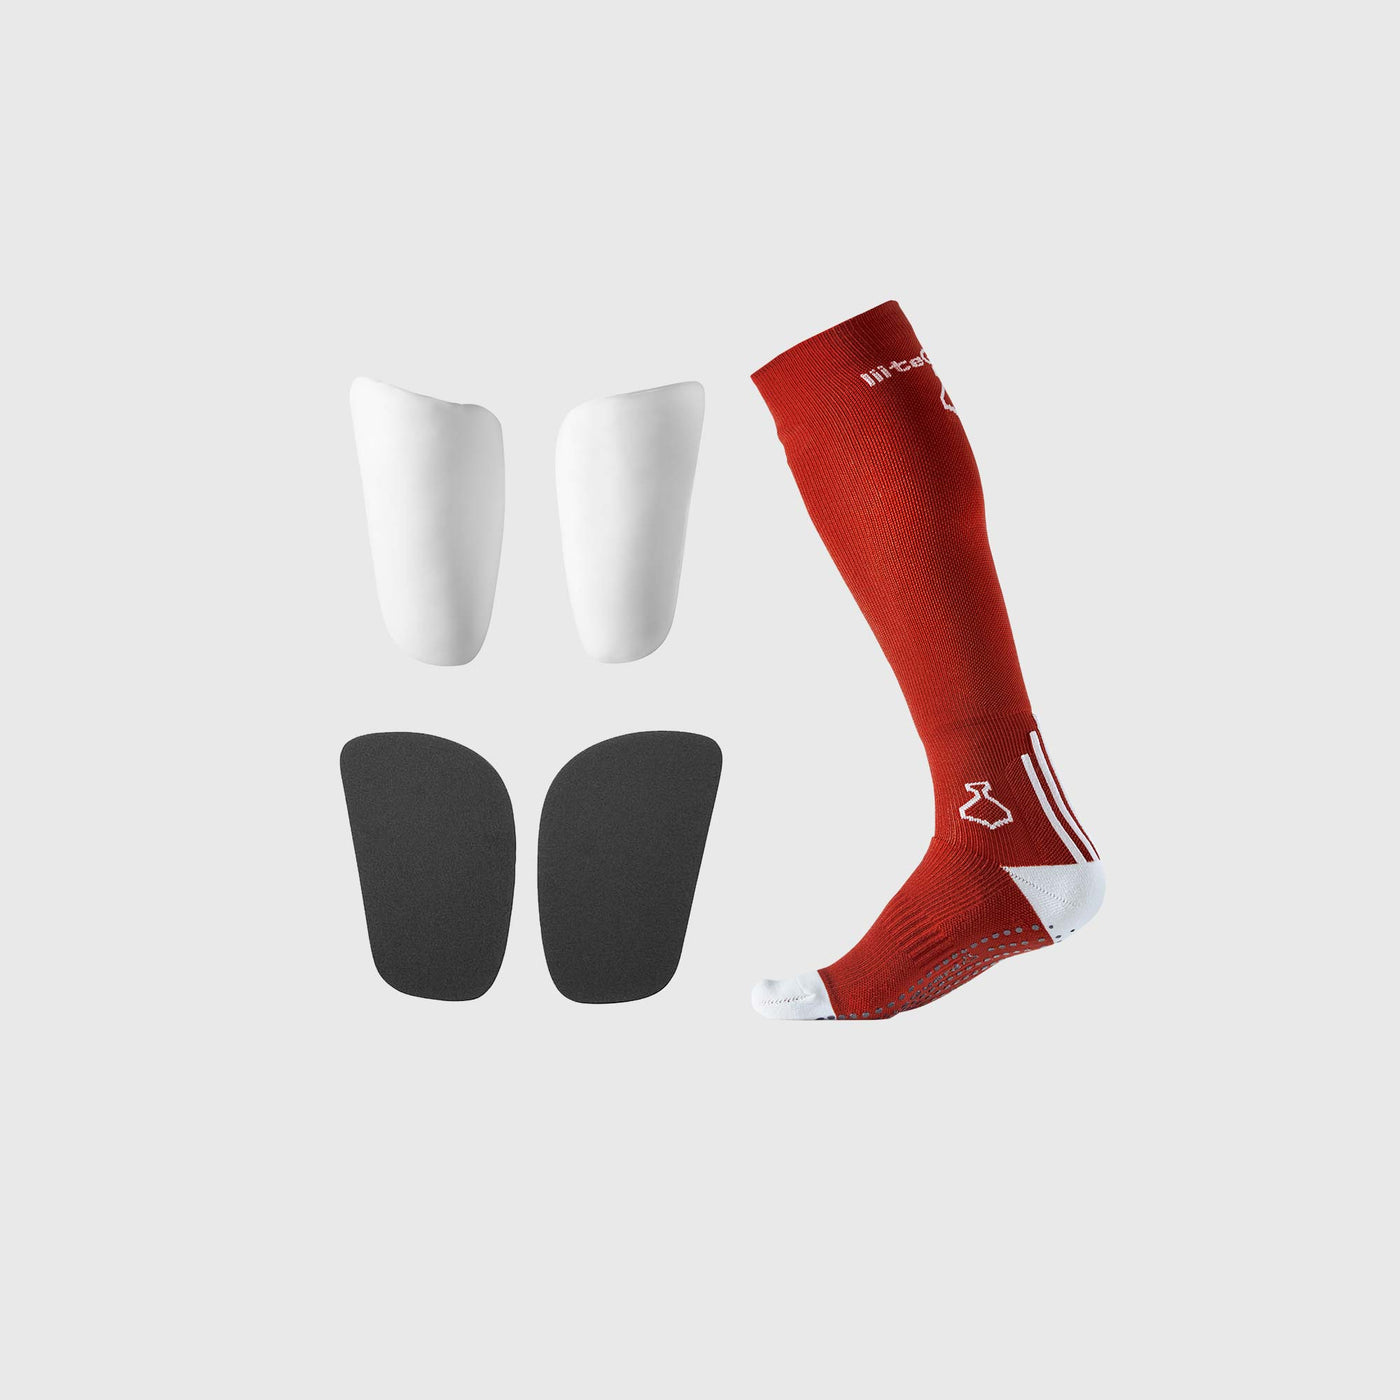 Liiteguard PERFORMANCE SET Long socks ROT